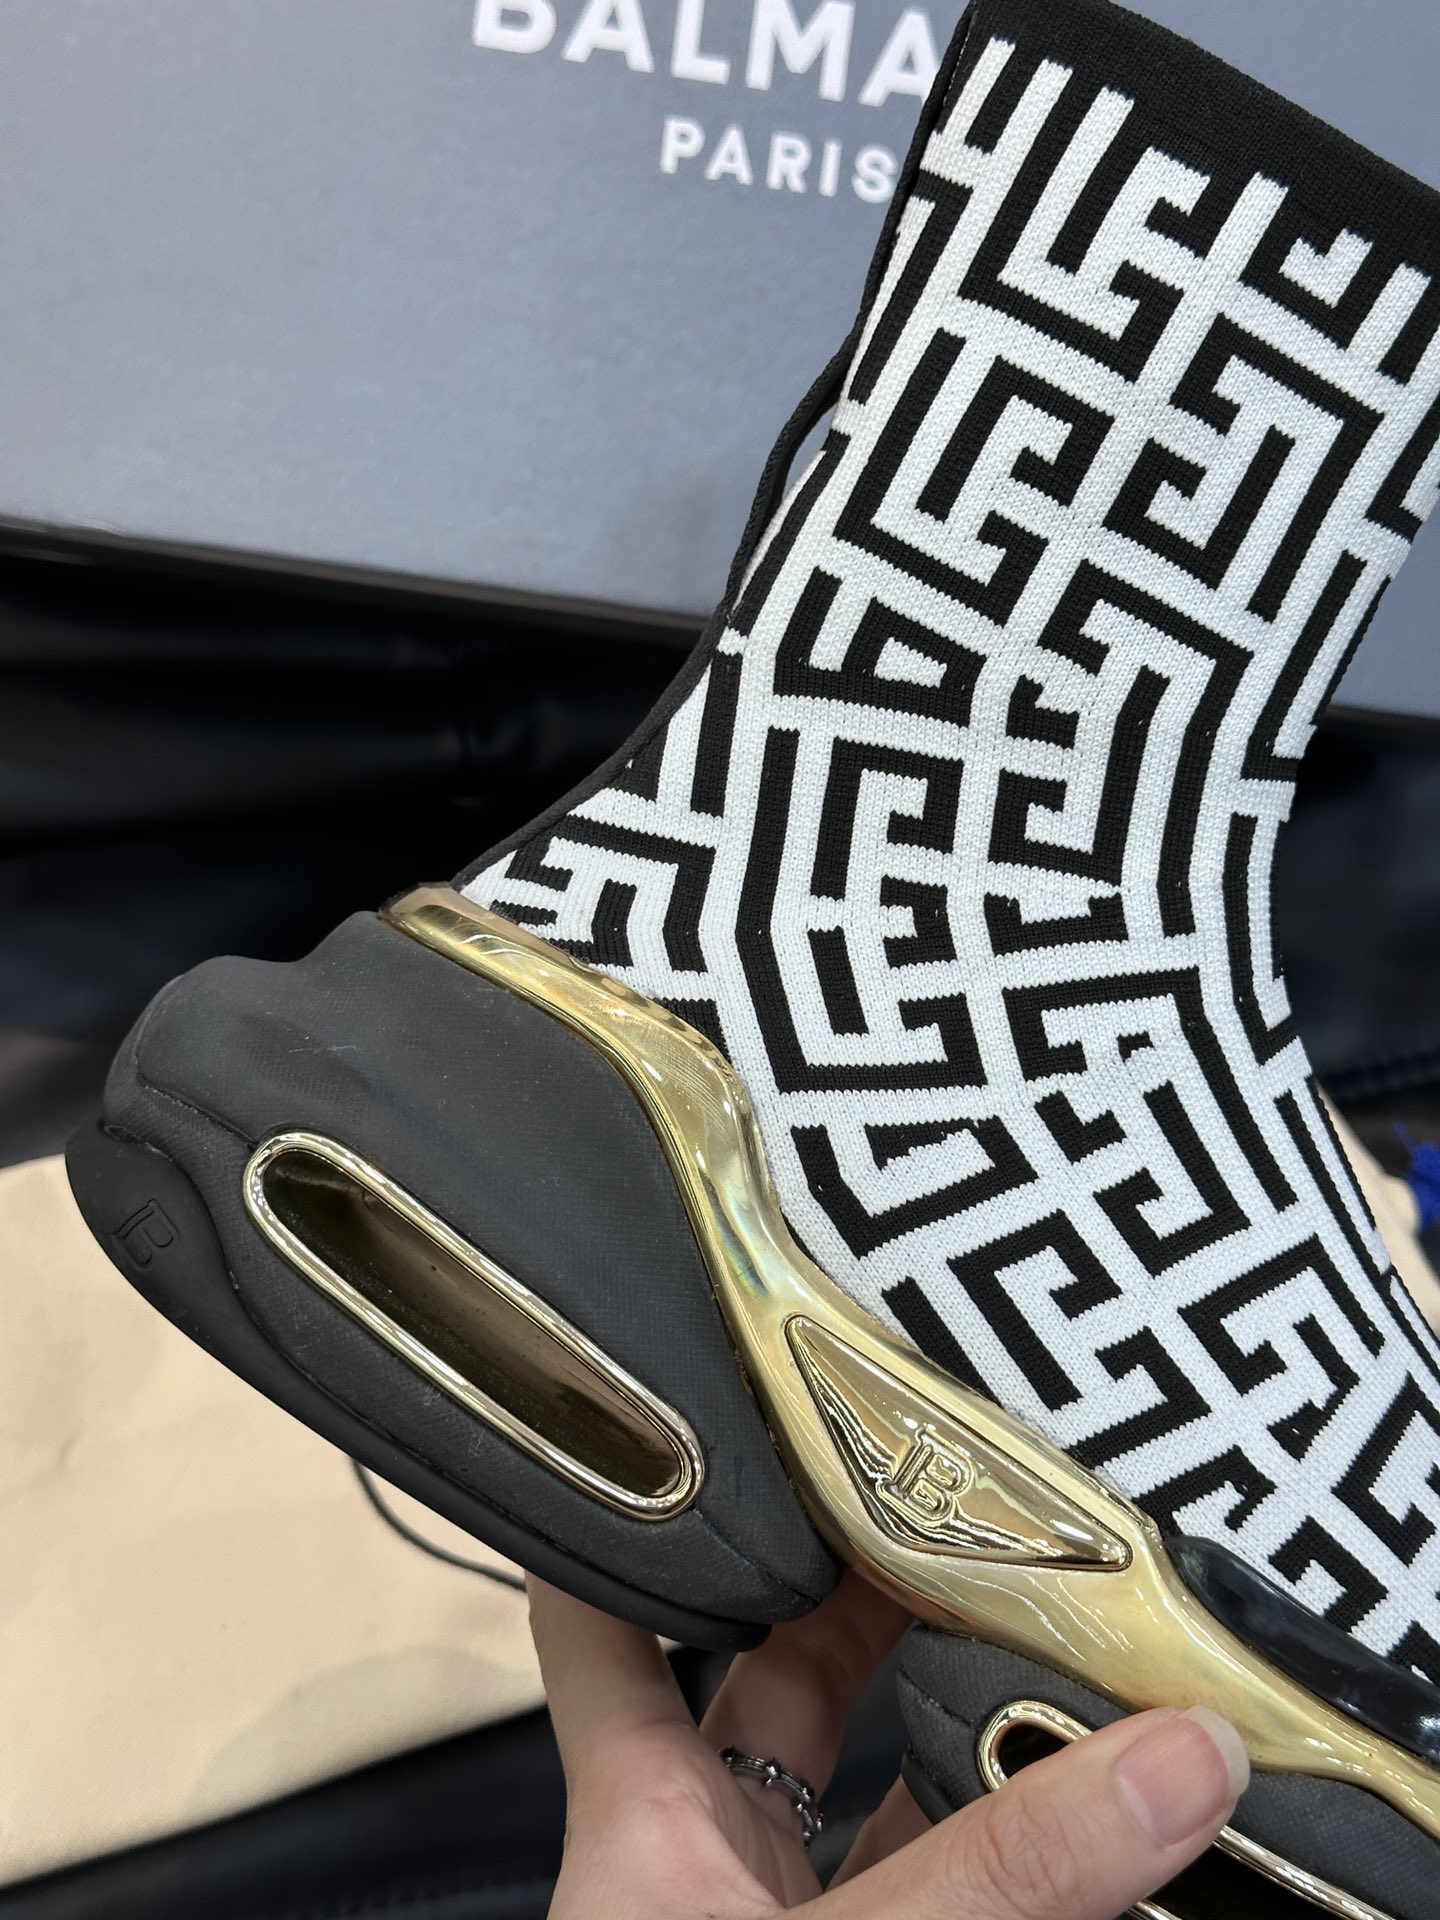 BALMAIN巴尔曼超酷情侣款太空鞋高磅袜子鞋造型太帅了增高8CM妥妥的气场全开！设计师以神话的生物独角